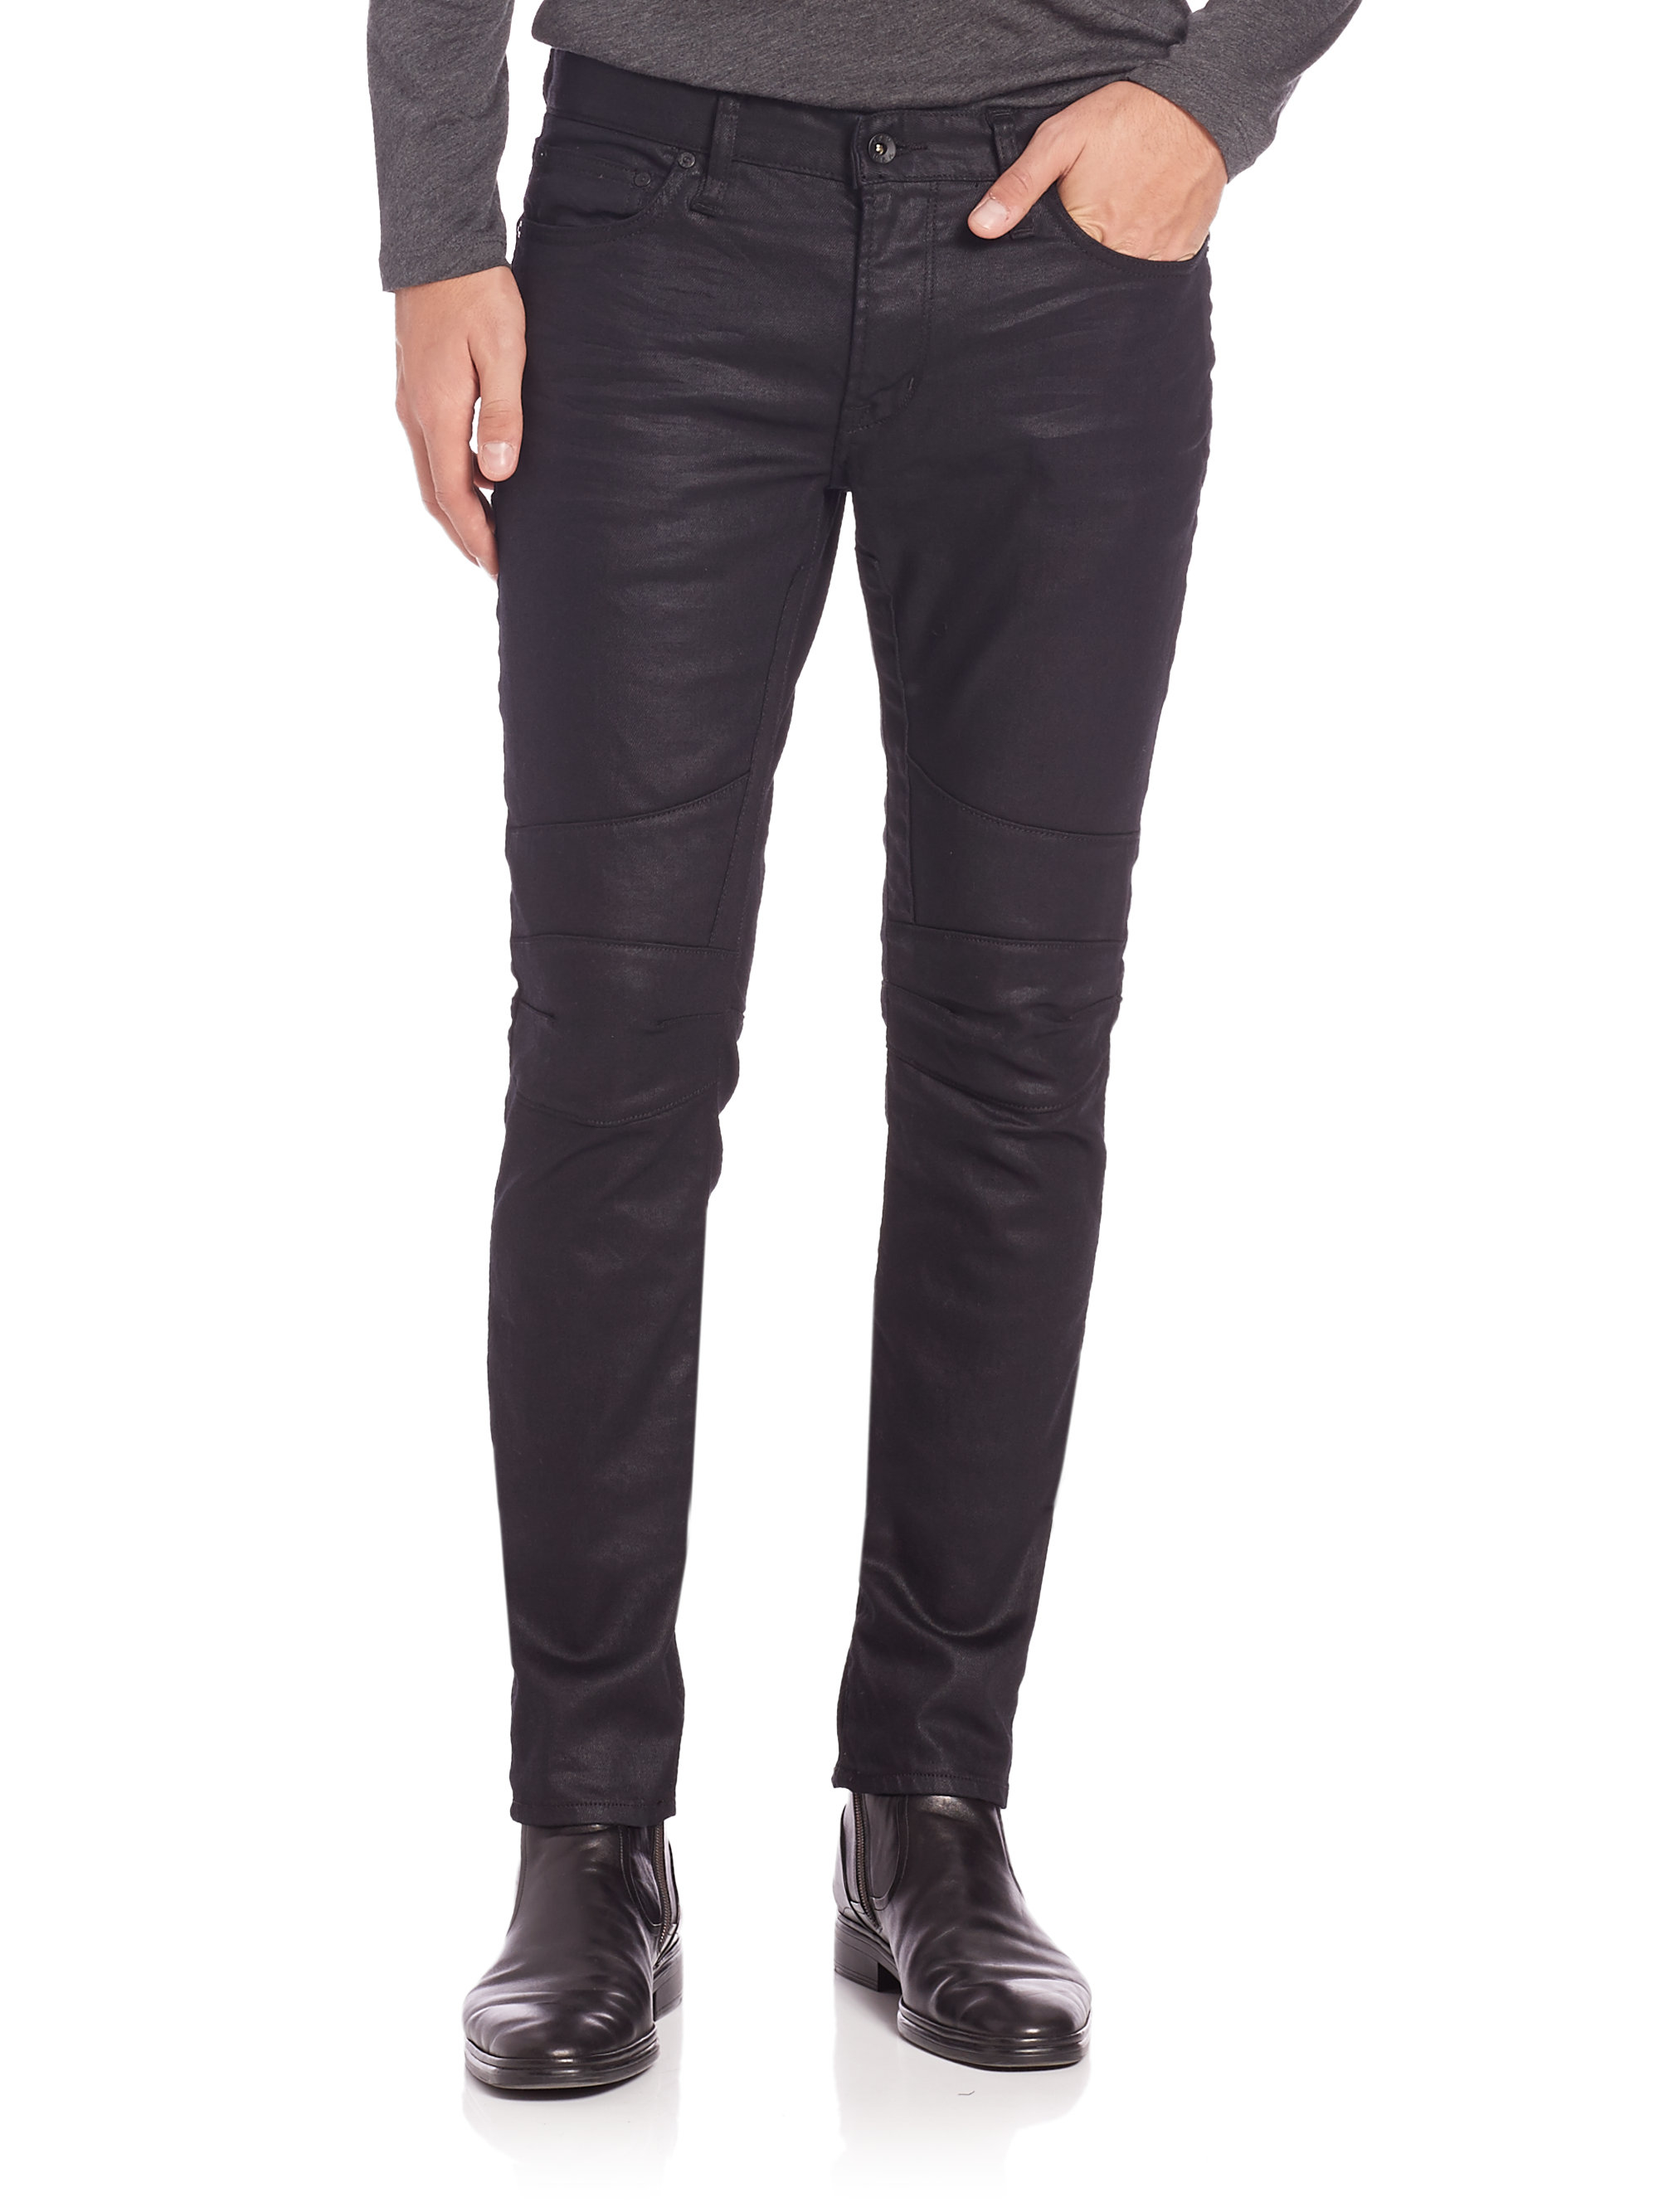 Lyst - John Varvatos Slim-fit Coated Motorcycle Jeans in Black for Men